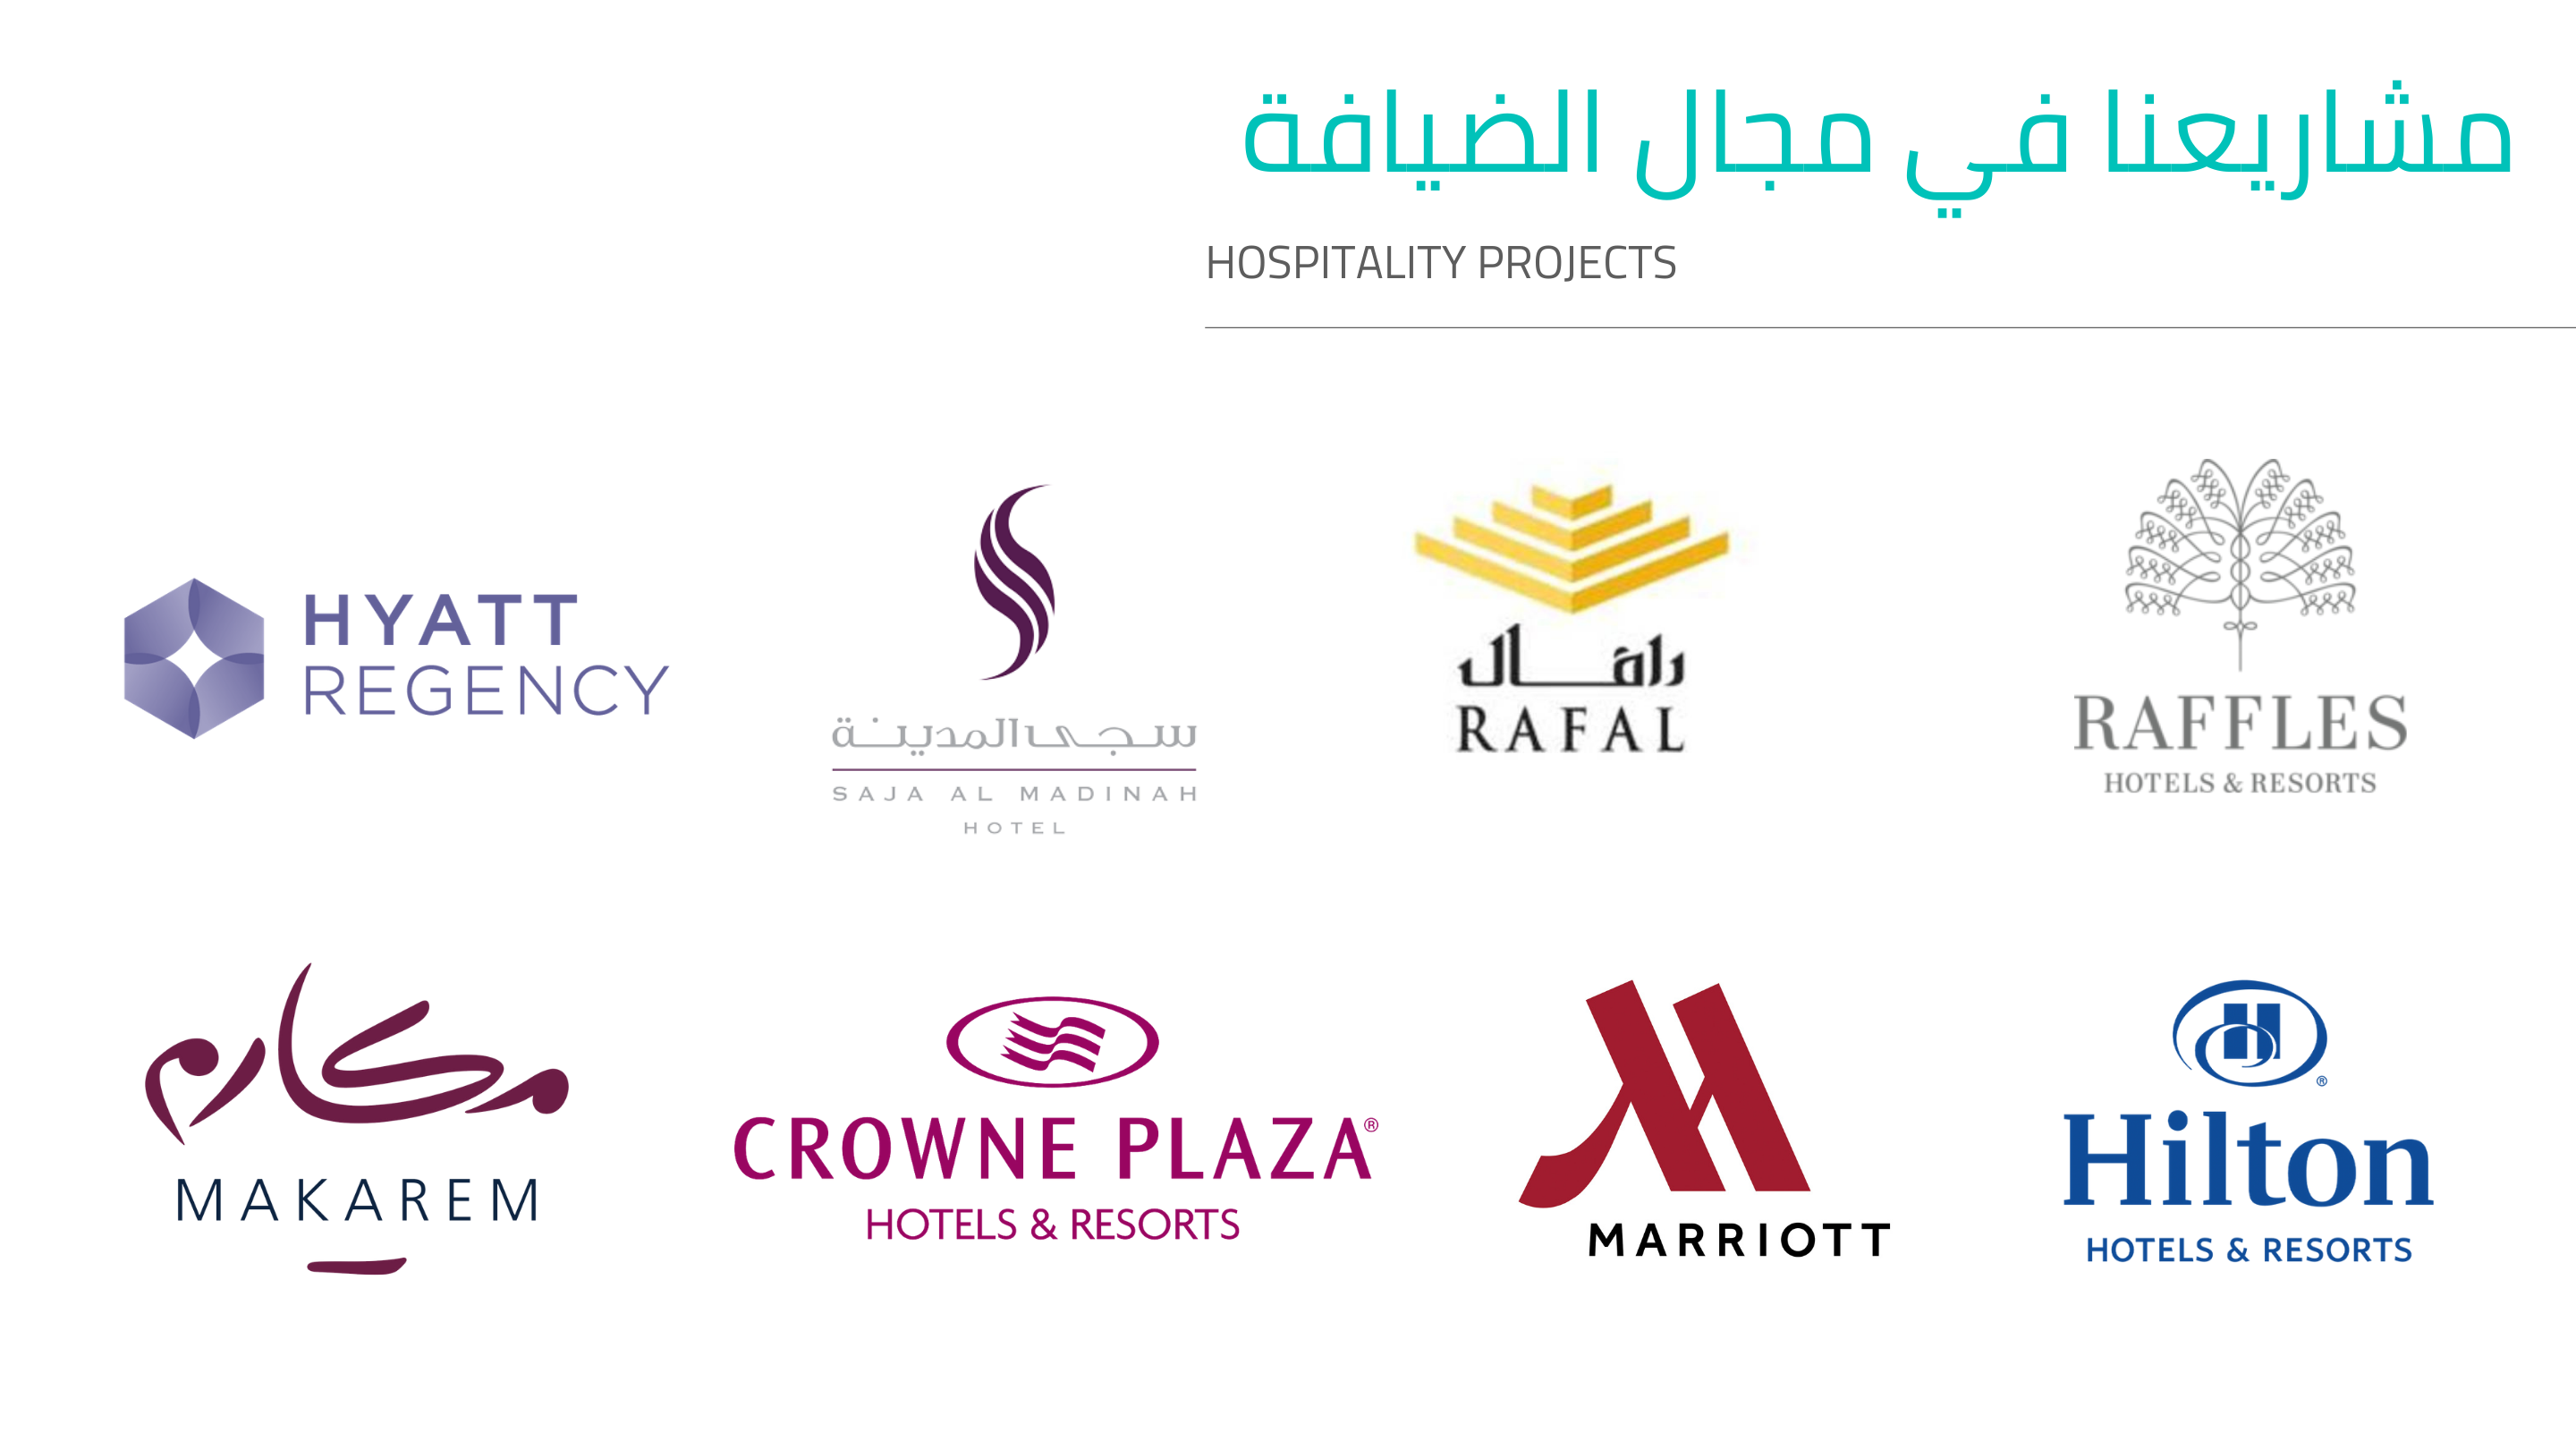 Saudi Hospitality Copywriting Projects by Taglime